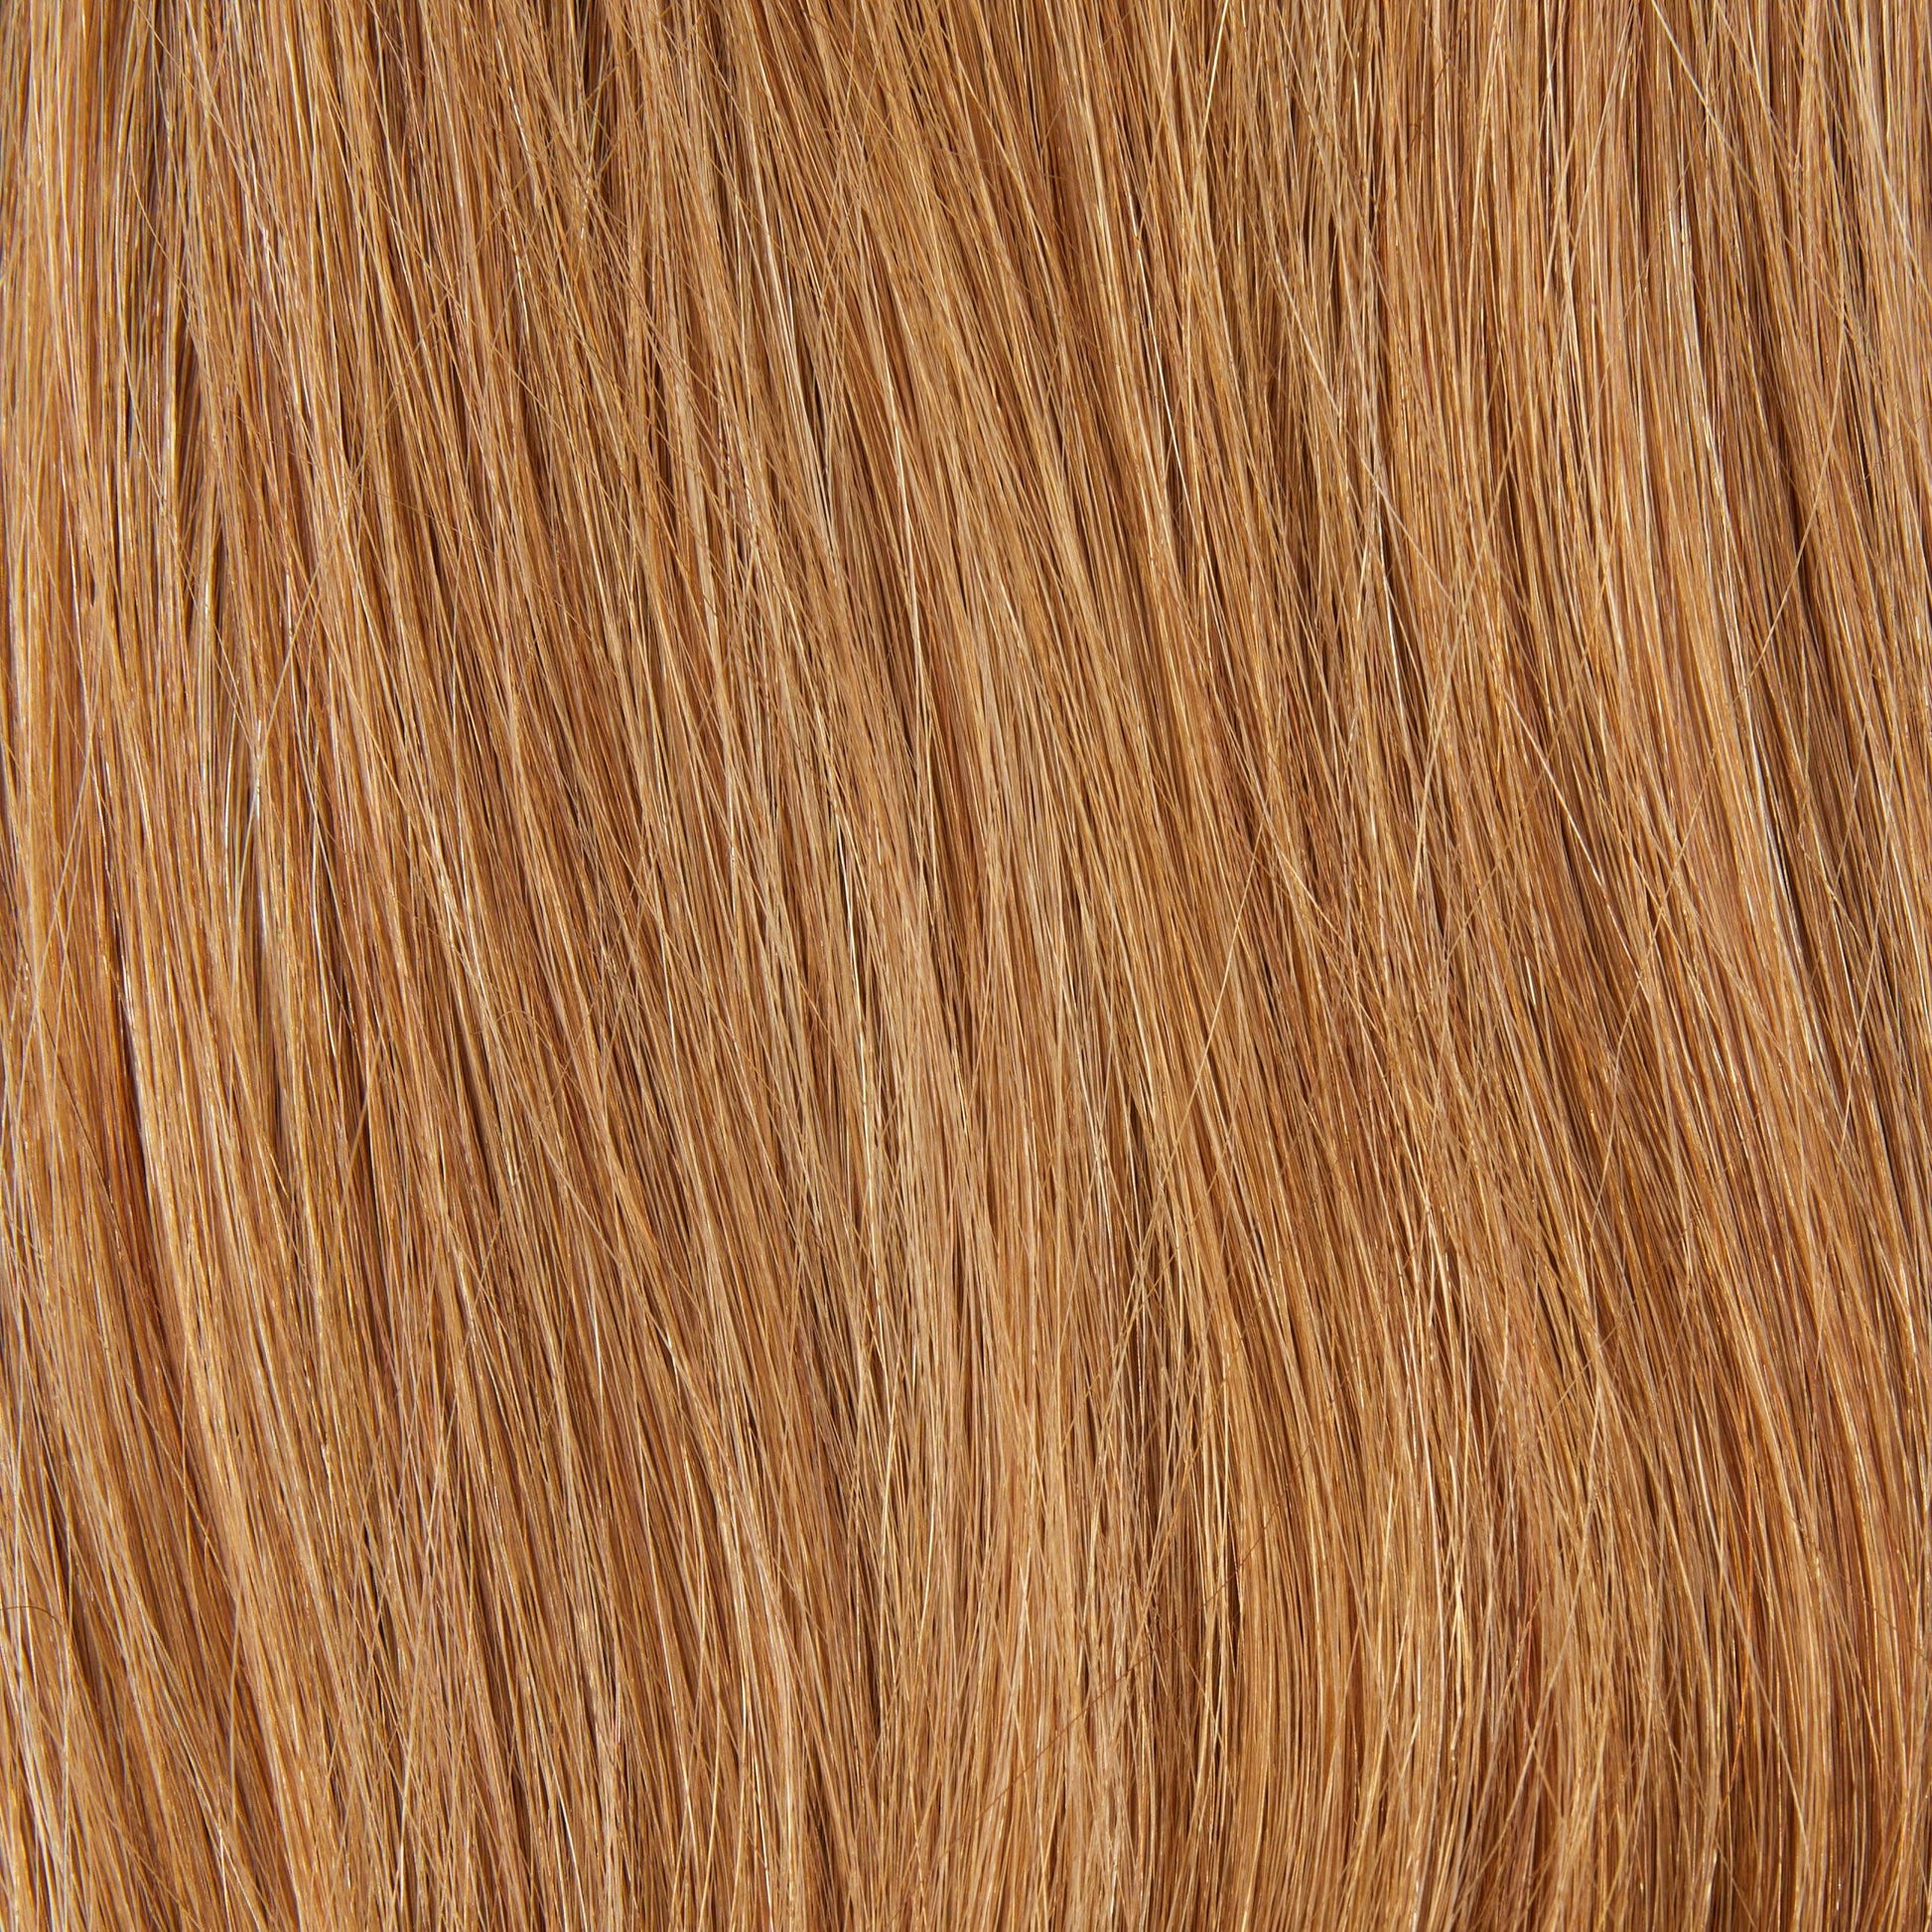 #24-14-12 -Blondest Blond CVP - Fortune Wigs